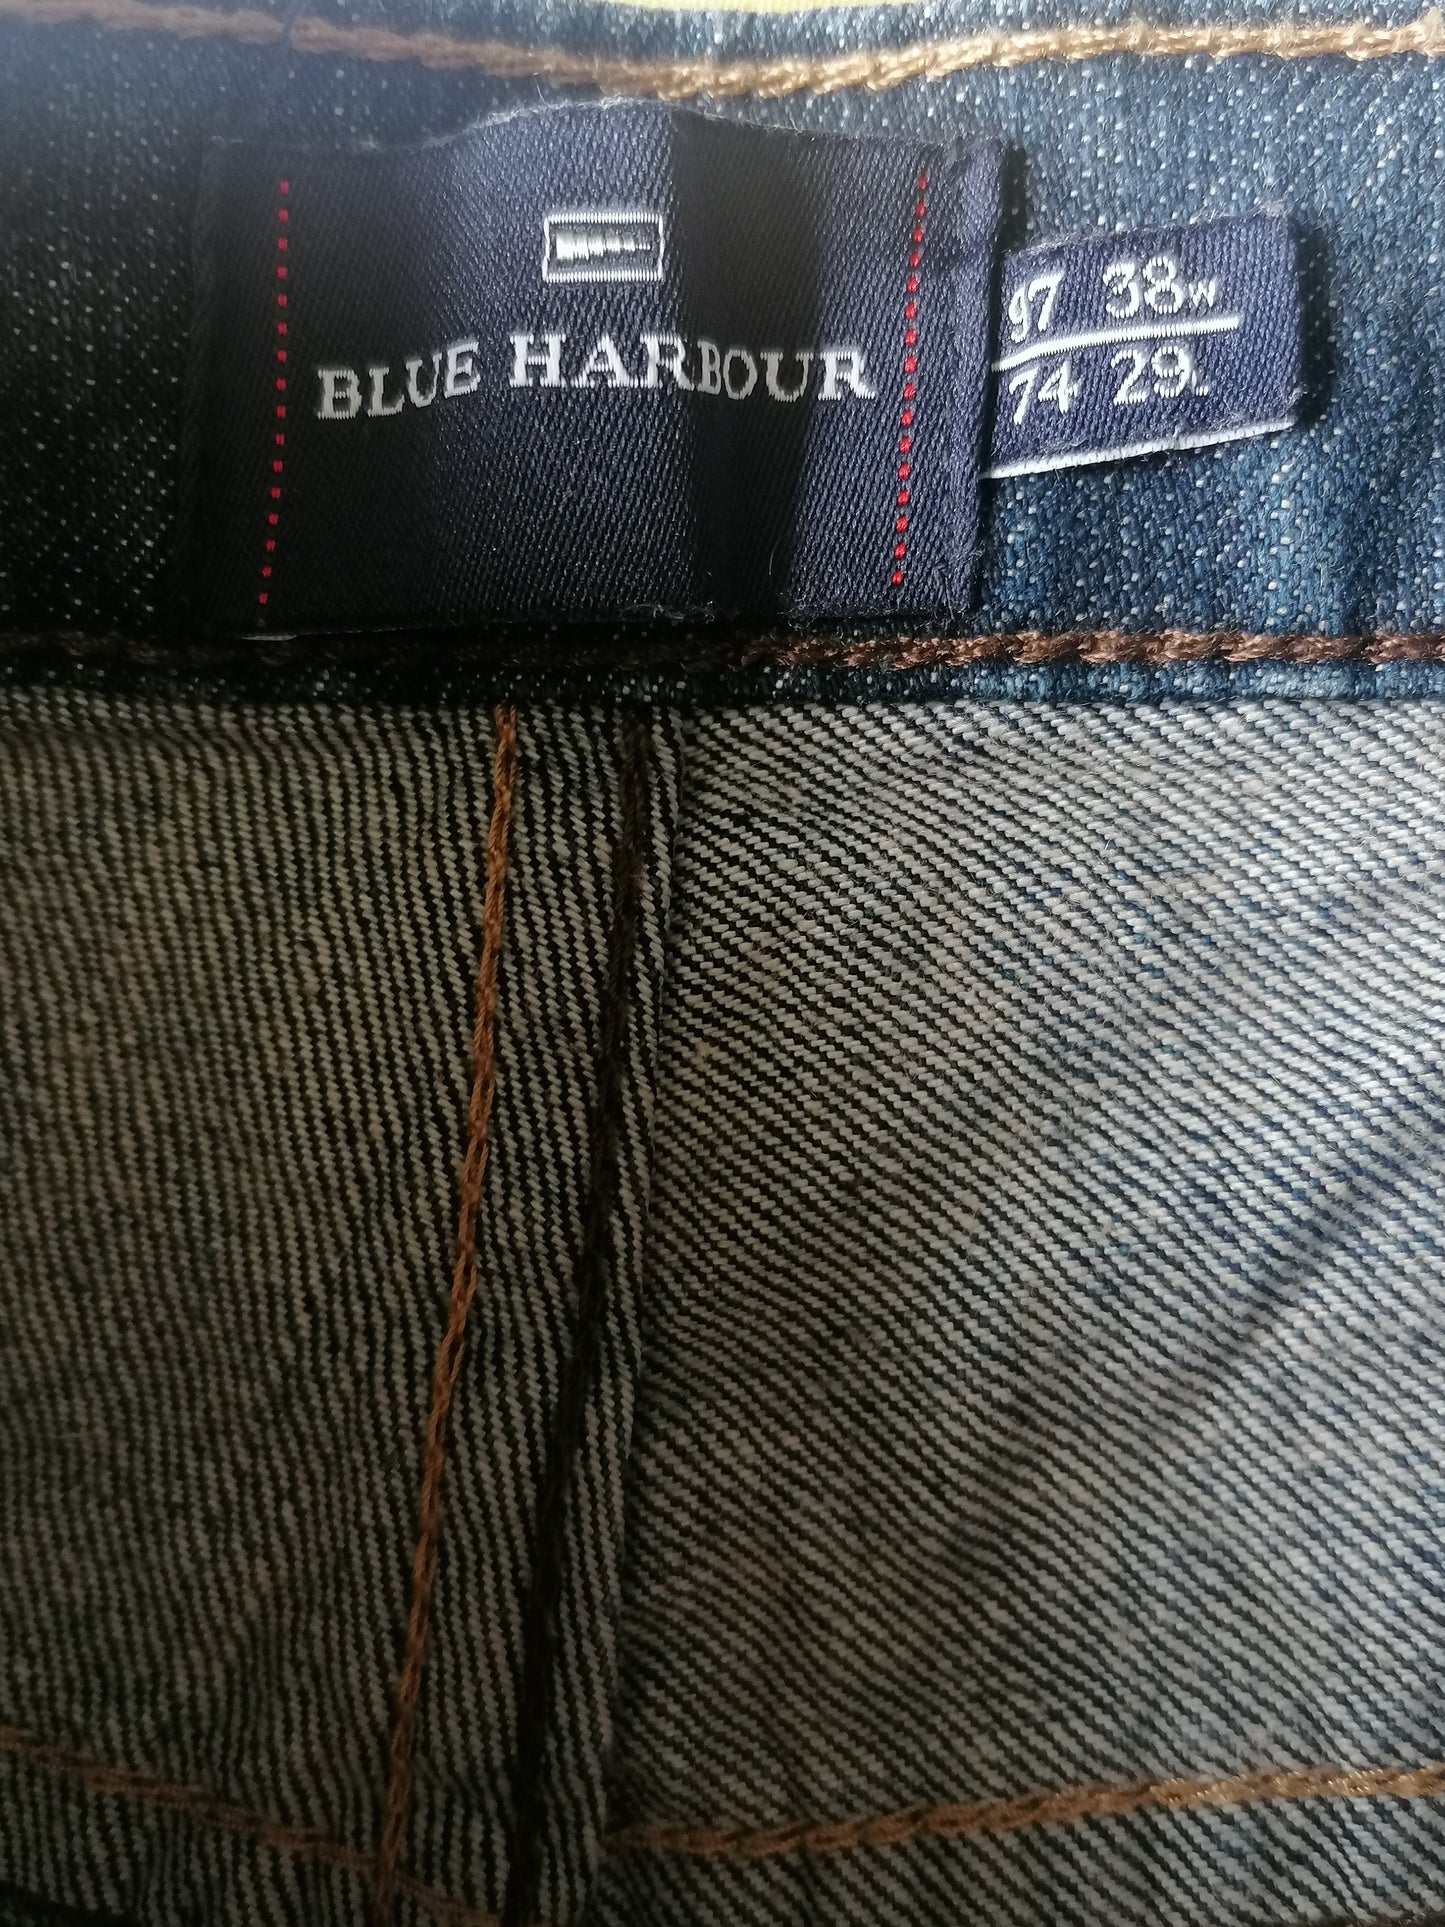 Blue Harbor Jeans. Dark blue colored. Size W38 - L30.